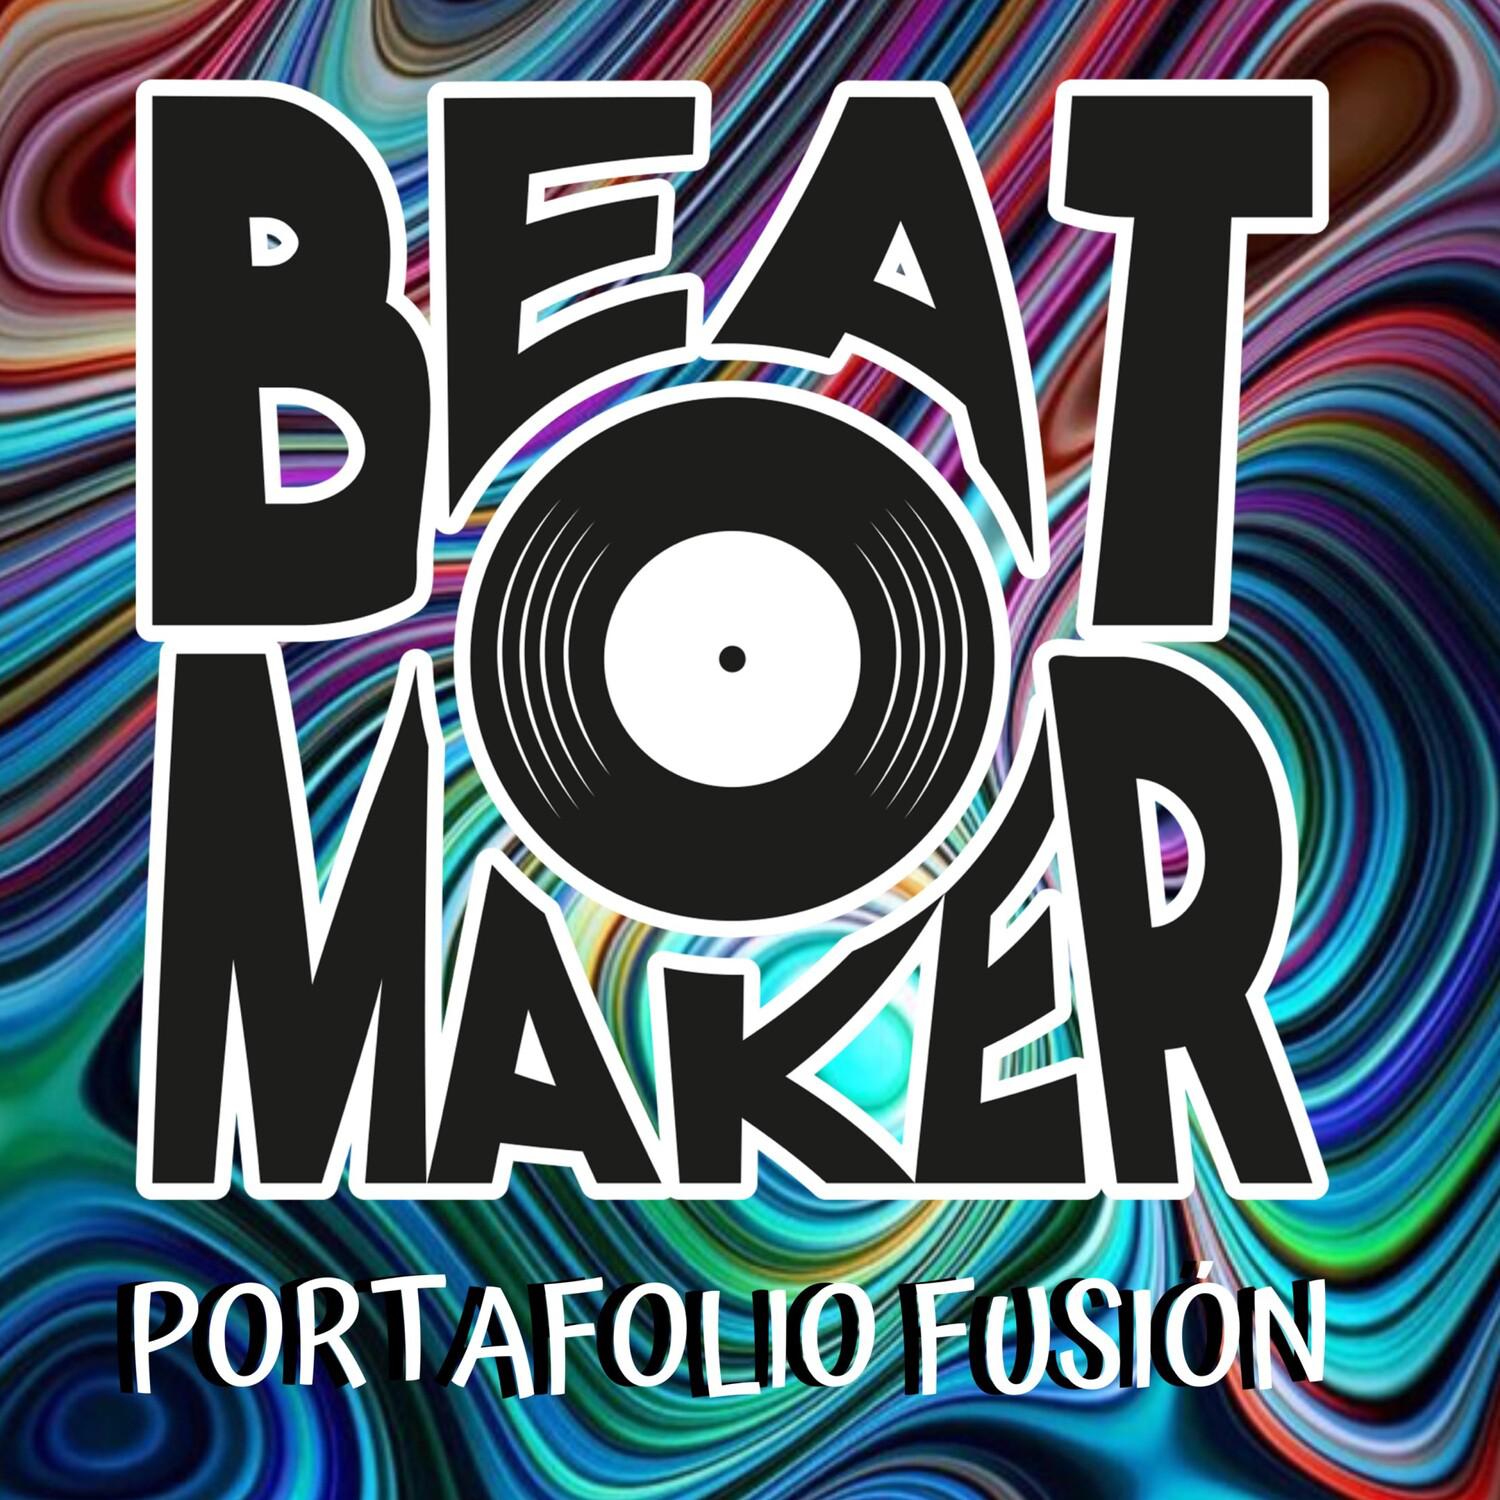 Beatmaker: Portafolio Fusio n